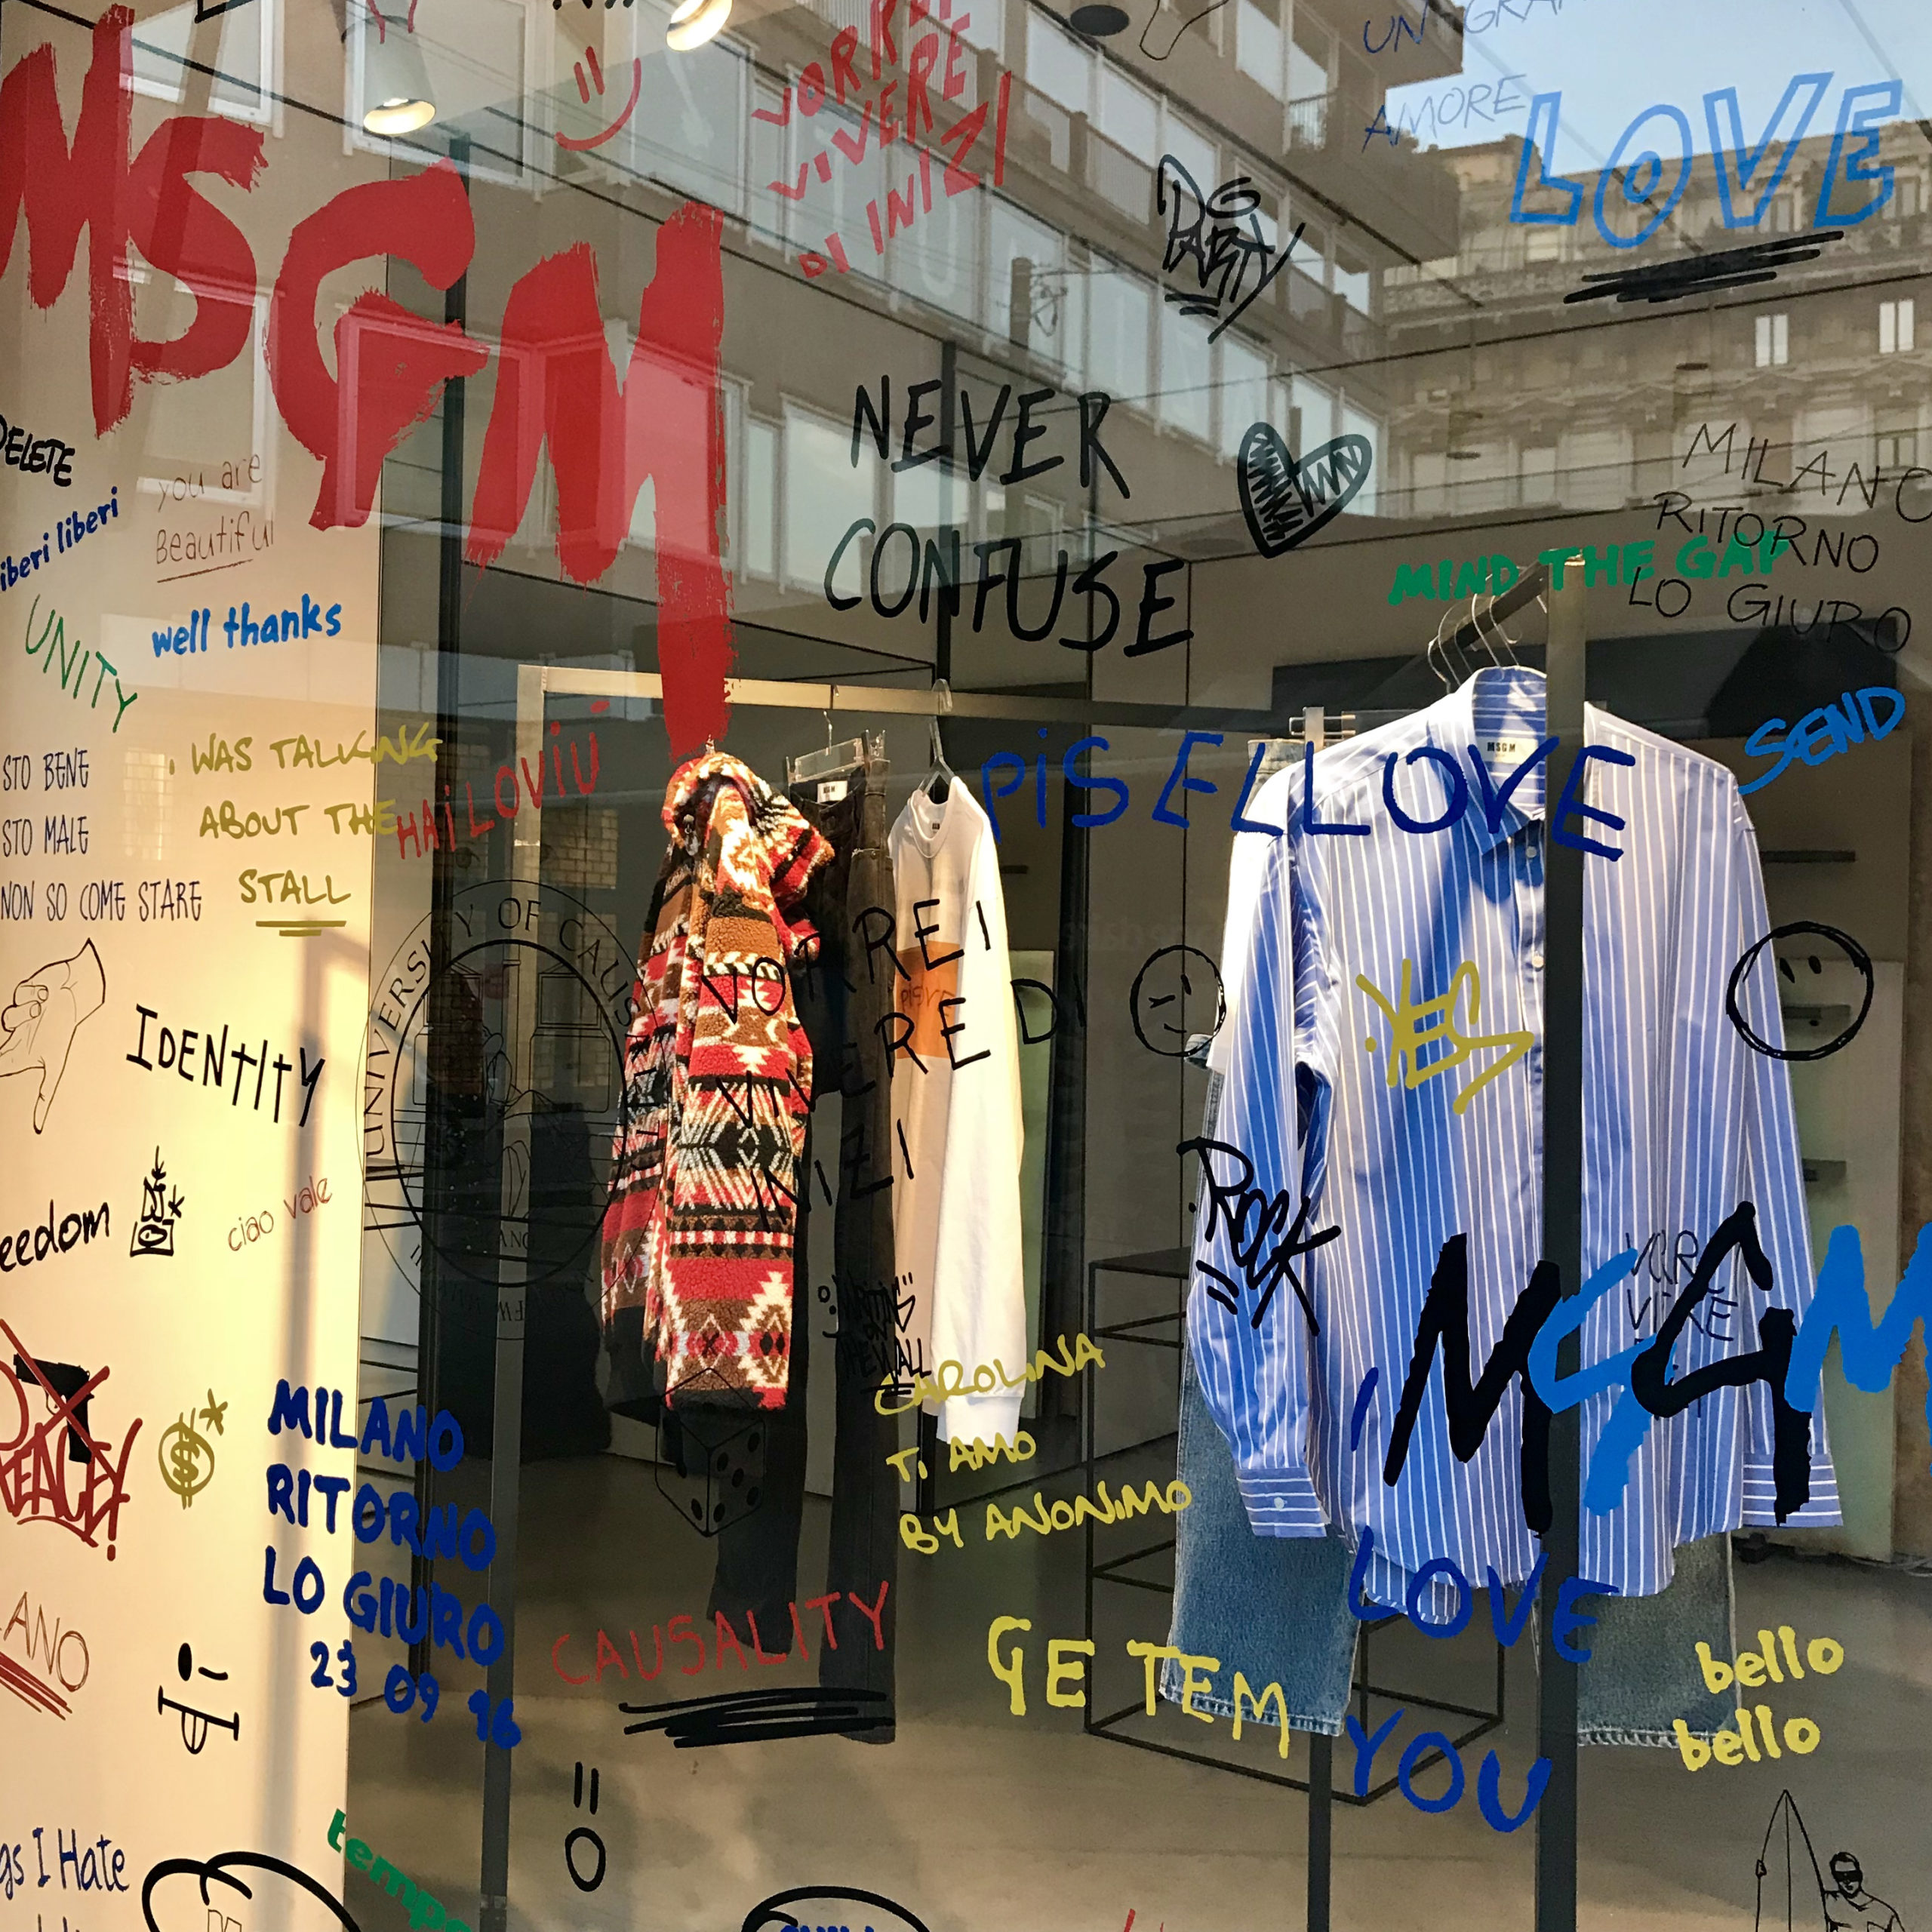 MSGM Milano window by Christian Rizzi - Sticker writing, glass and striped shirt